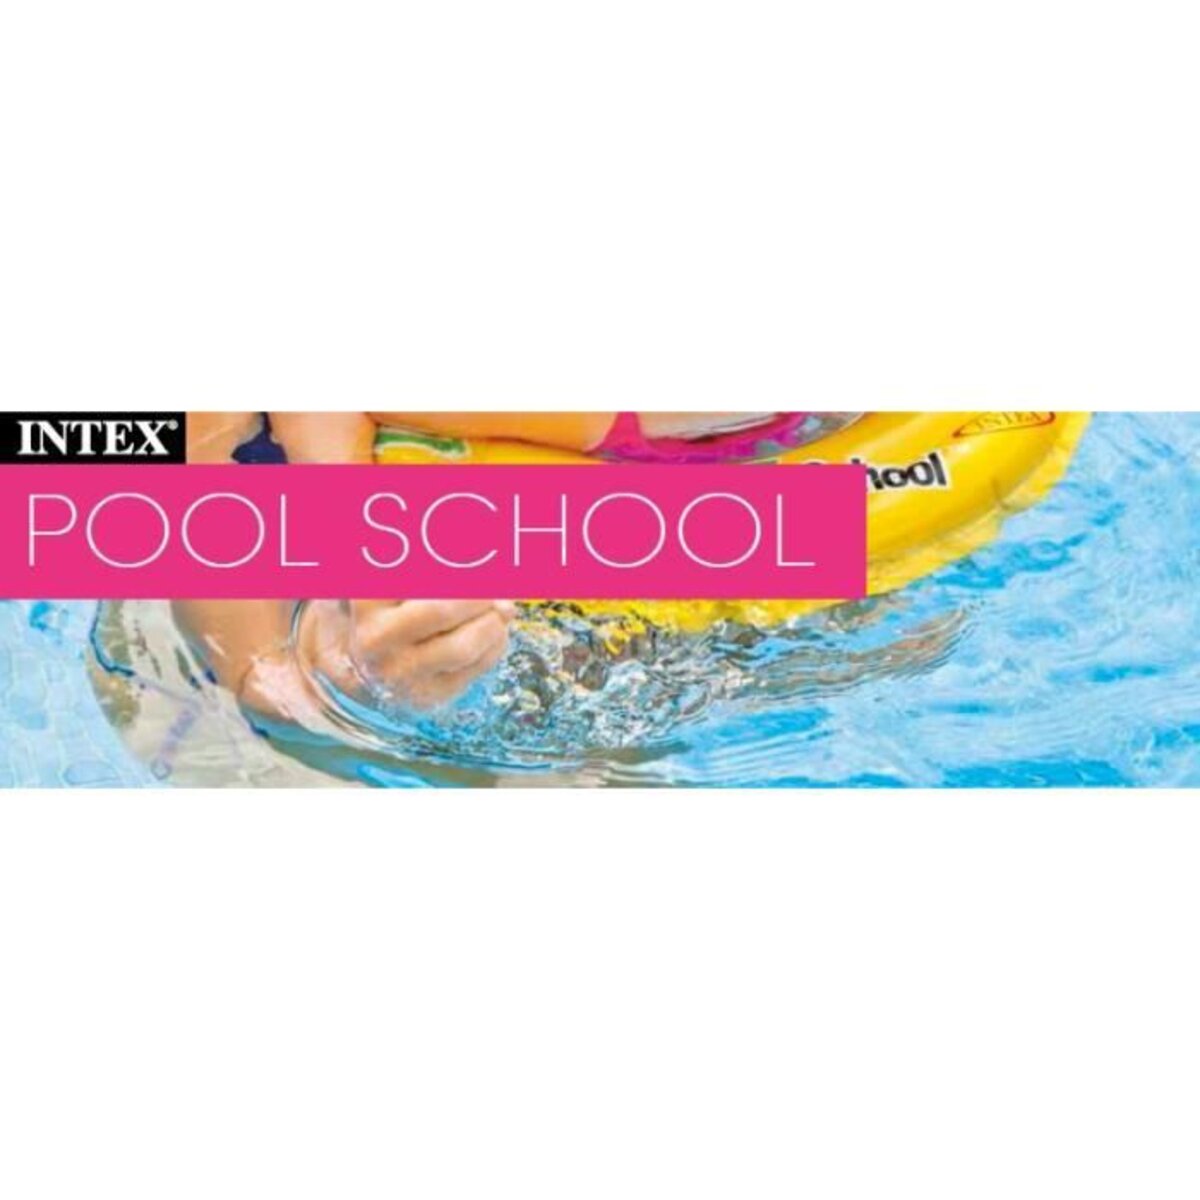 Bouée culotte gonflable Pool school INTEX